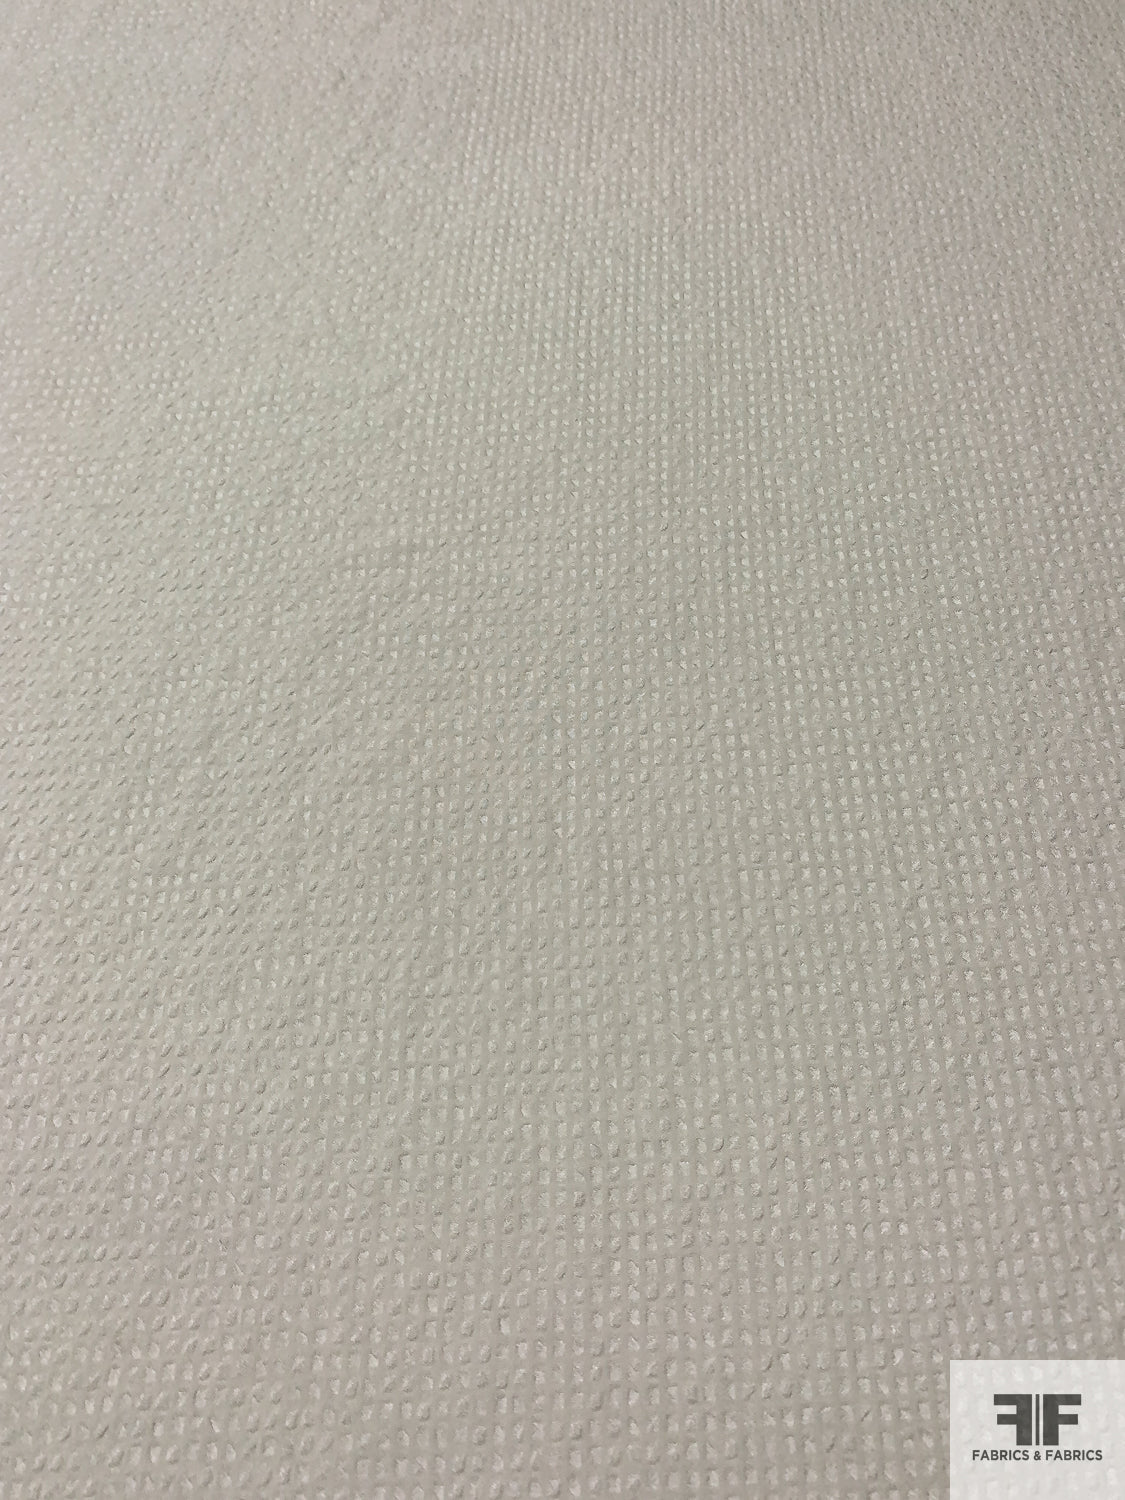 Seersucker Polyester Chiffon - Light Ivory